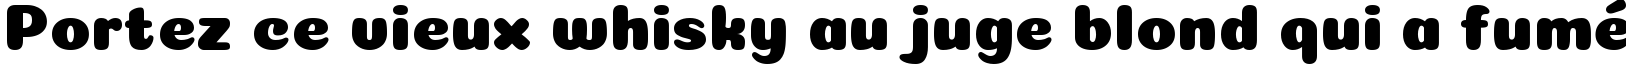 Пример написания шрифтом Coiny Cyrillic текста на французском